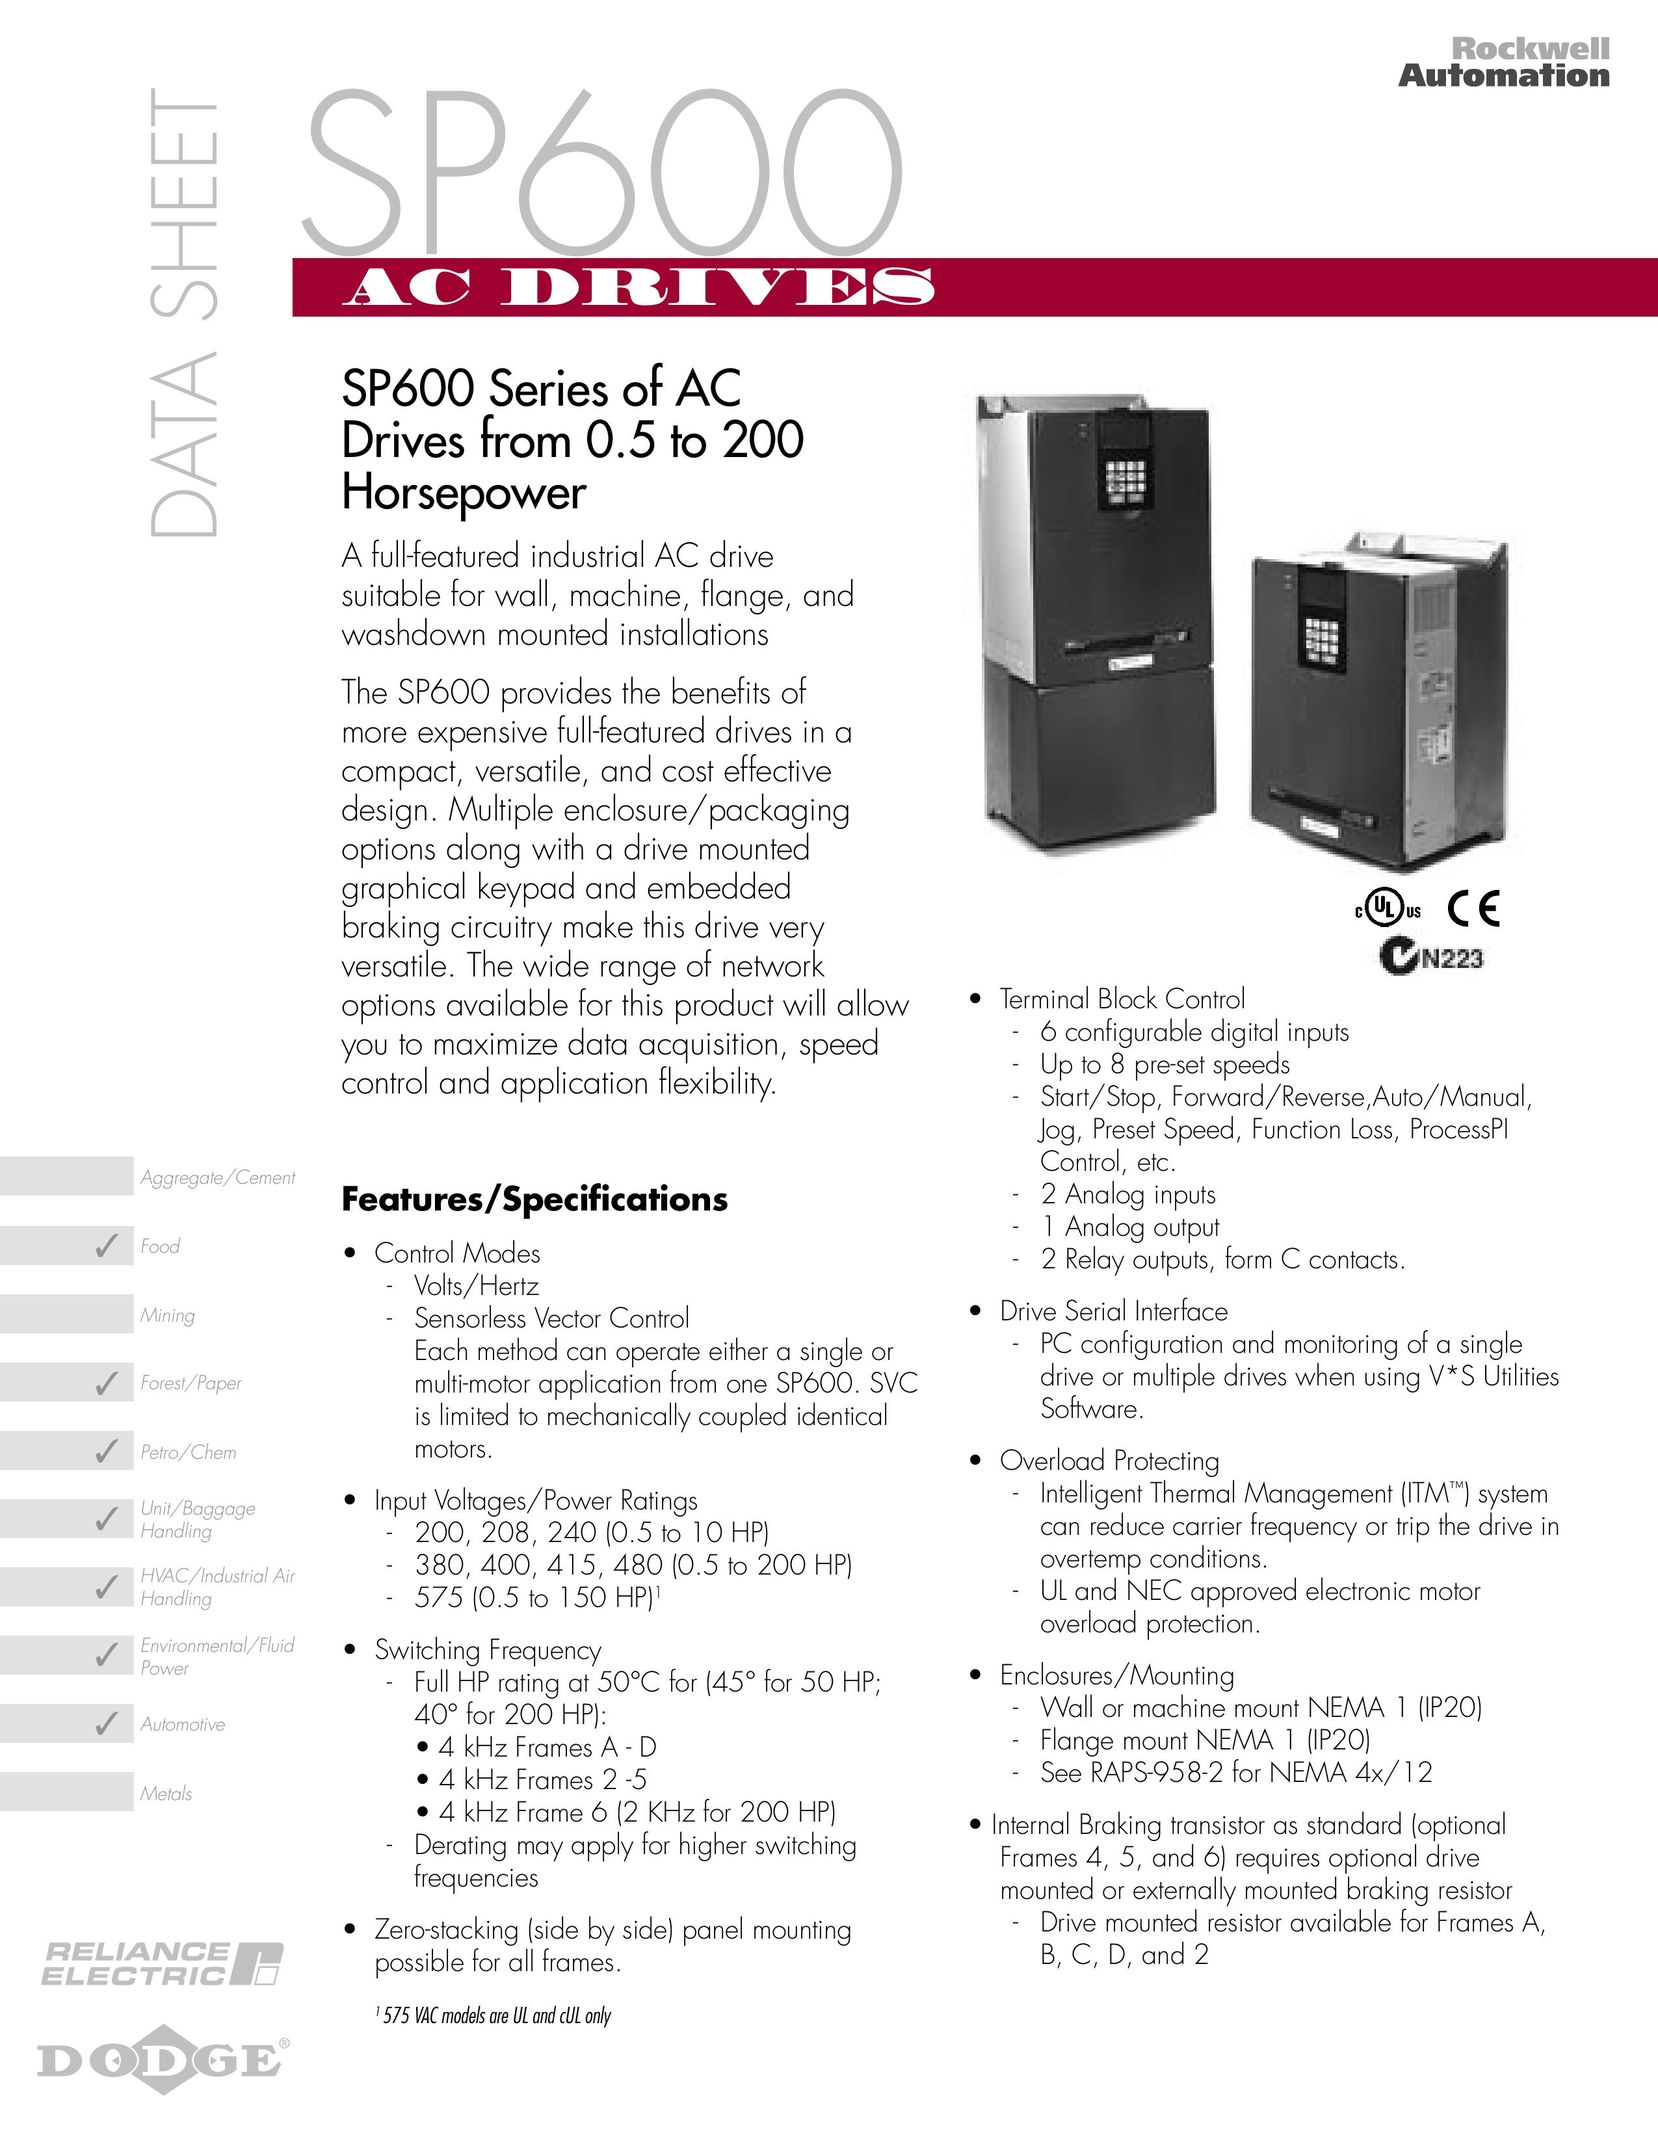 Dodge SP600 Series Air Conditioner User Manual